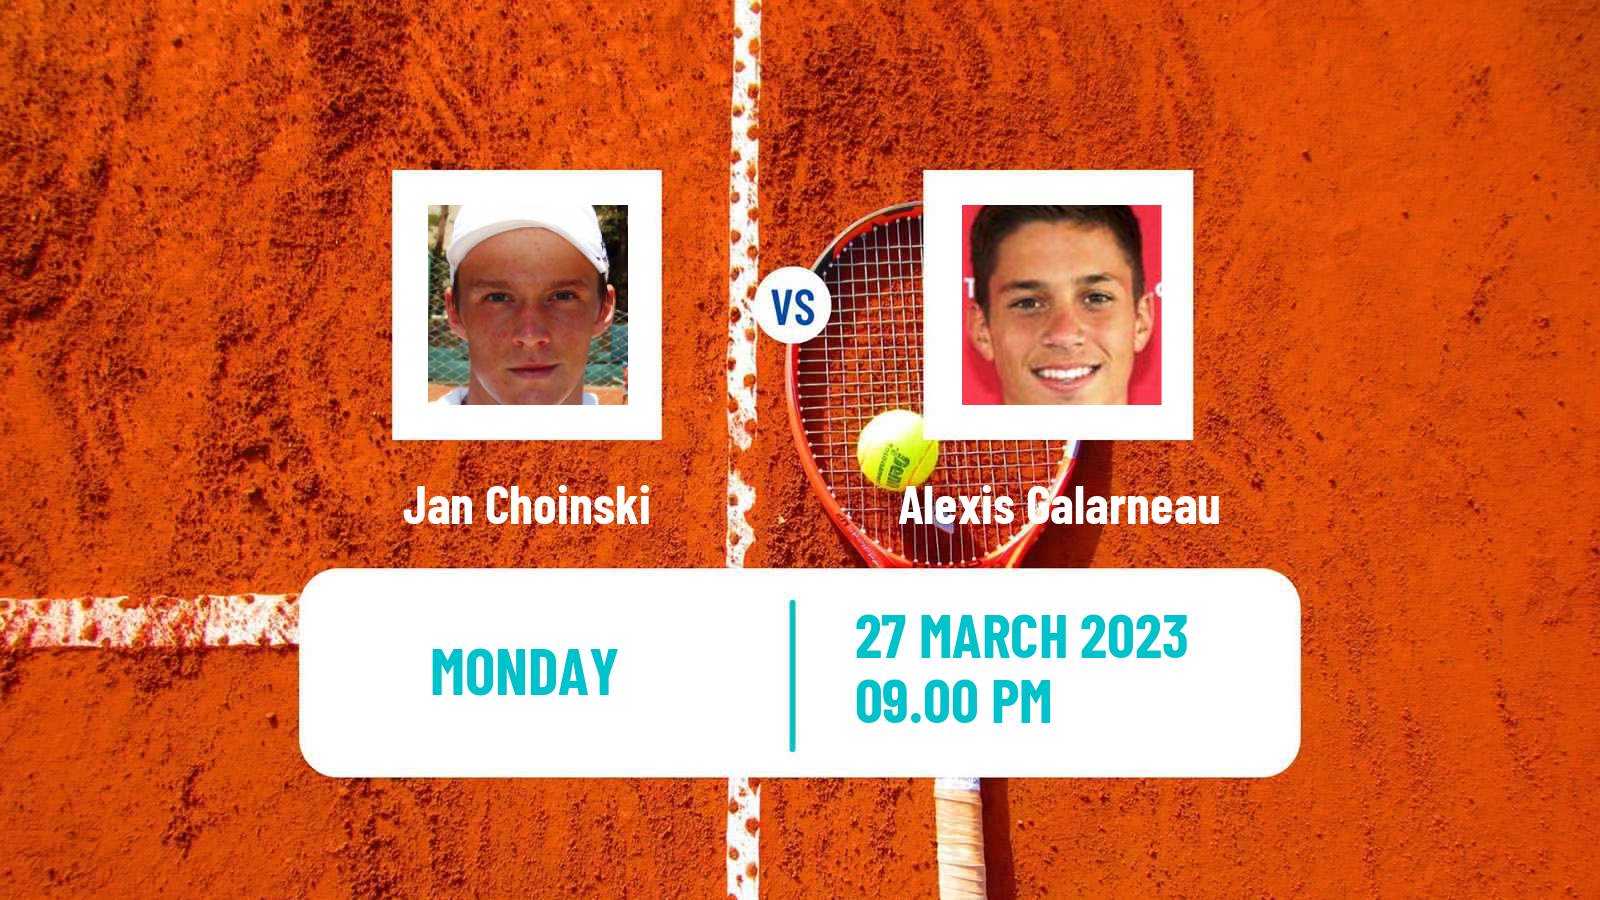 Tennis ATP Challenger Jan Choinski - Alexis Galarneau